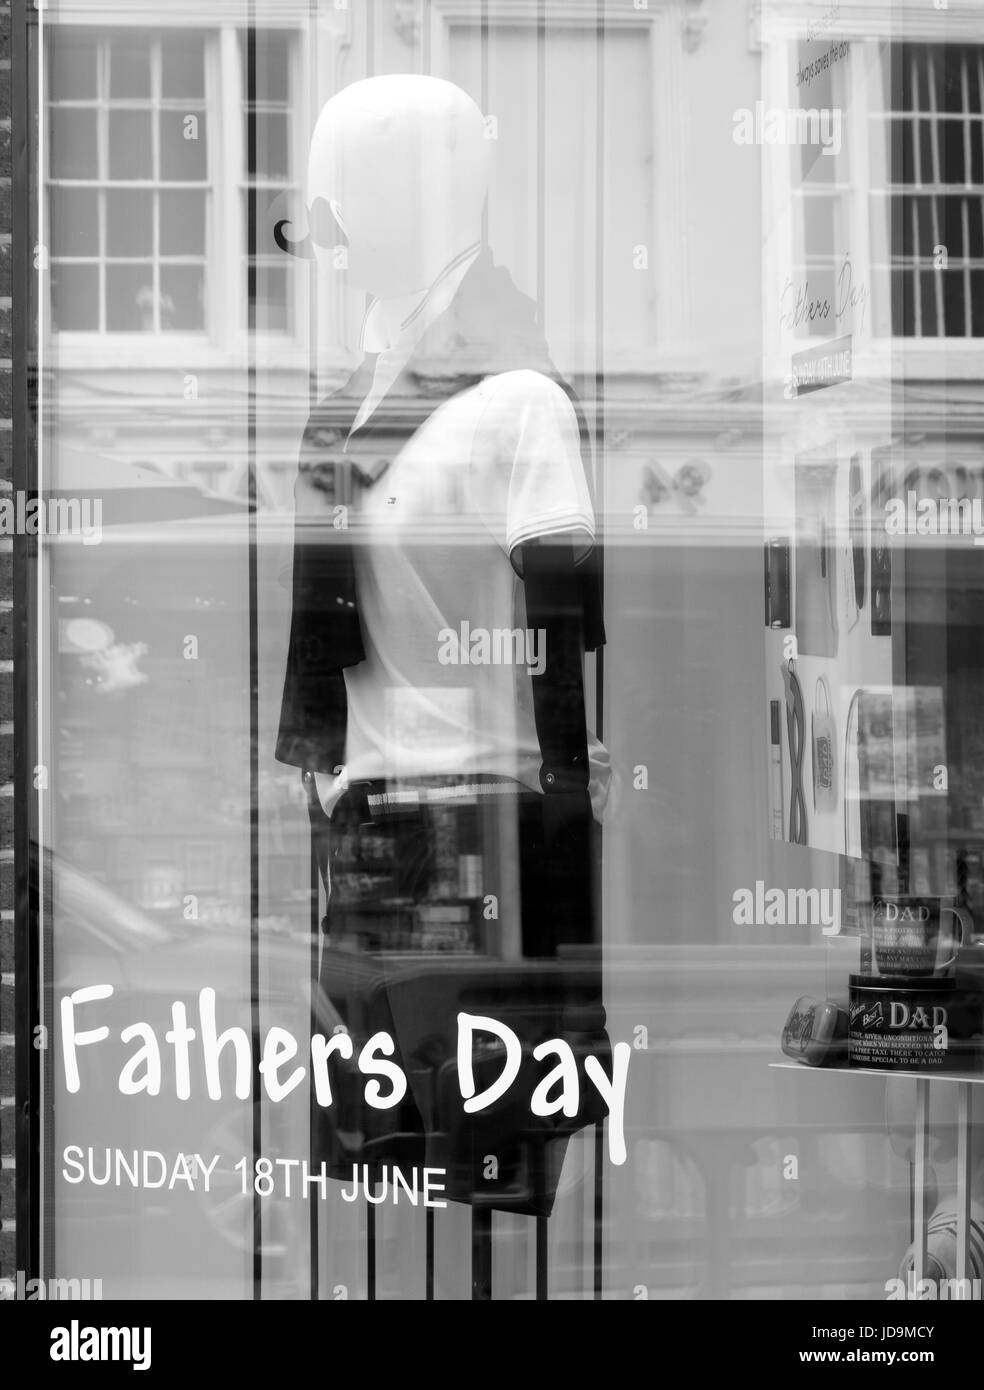 Fathers Day shopfront window display Stock Photo